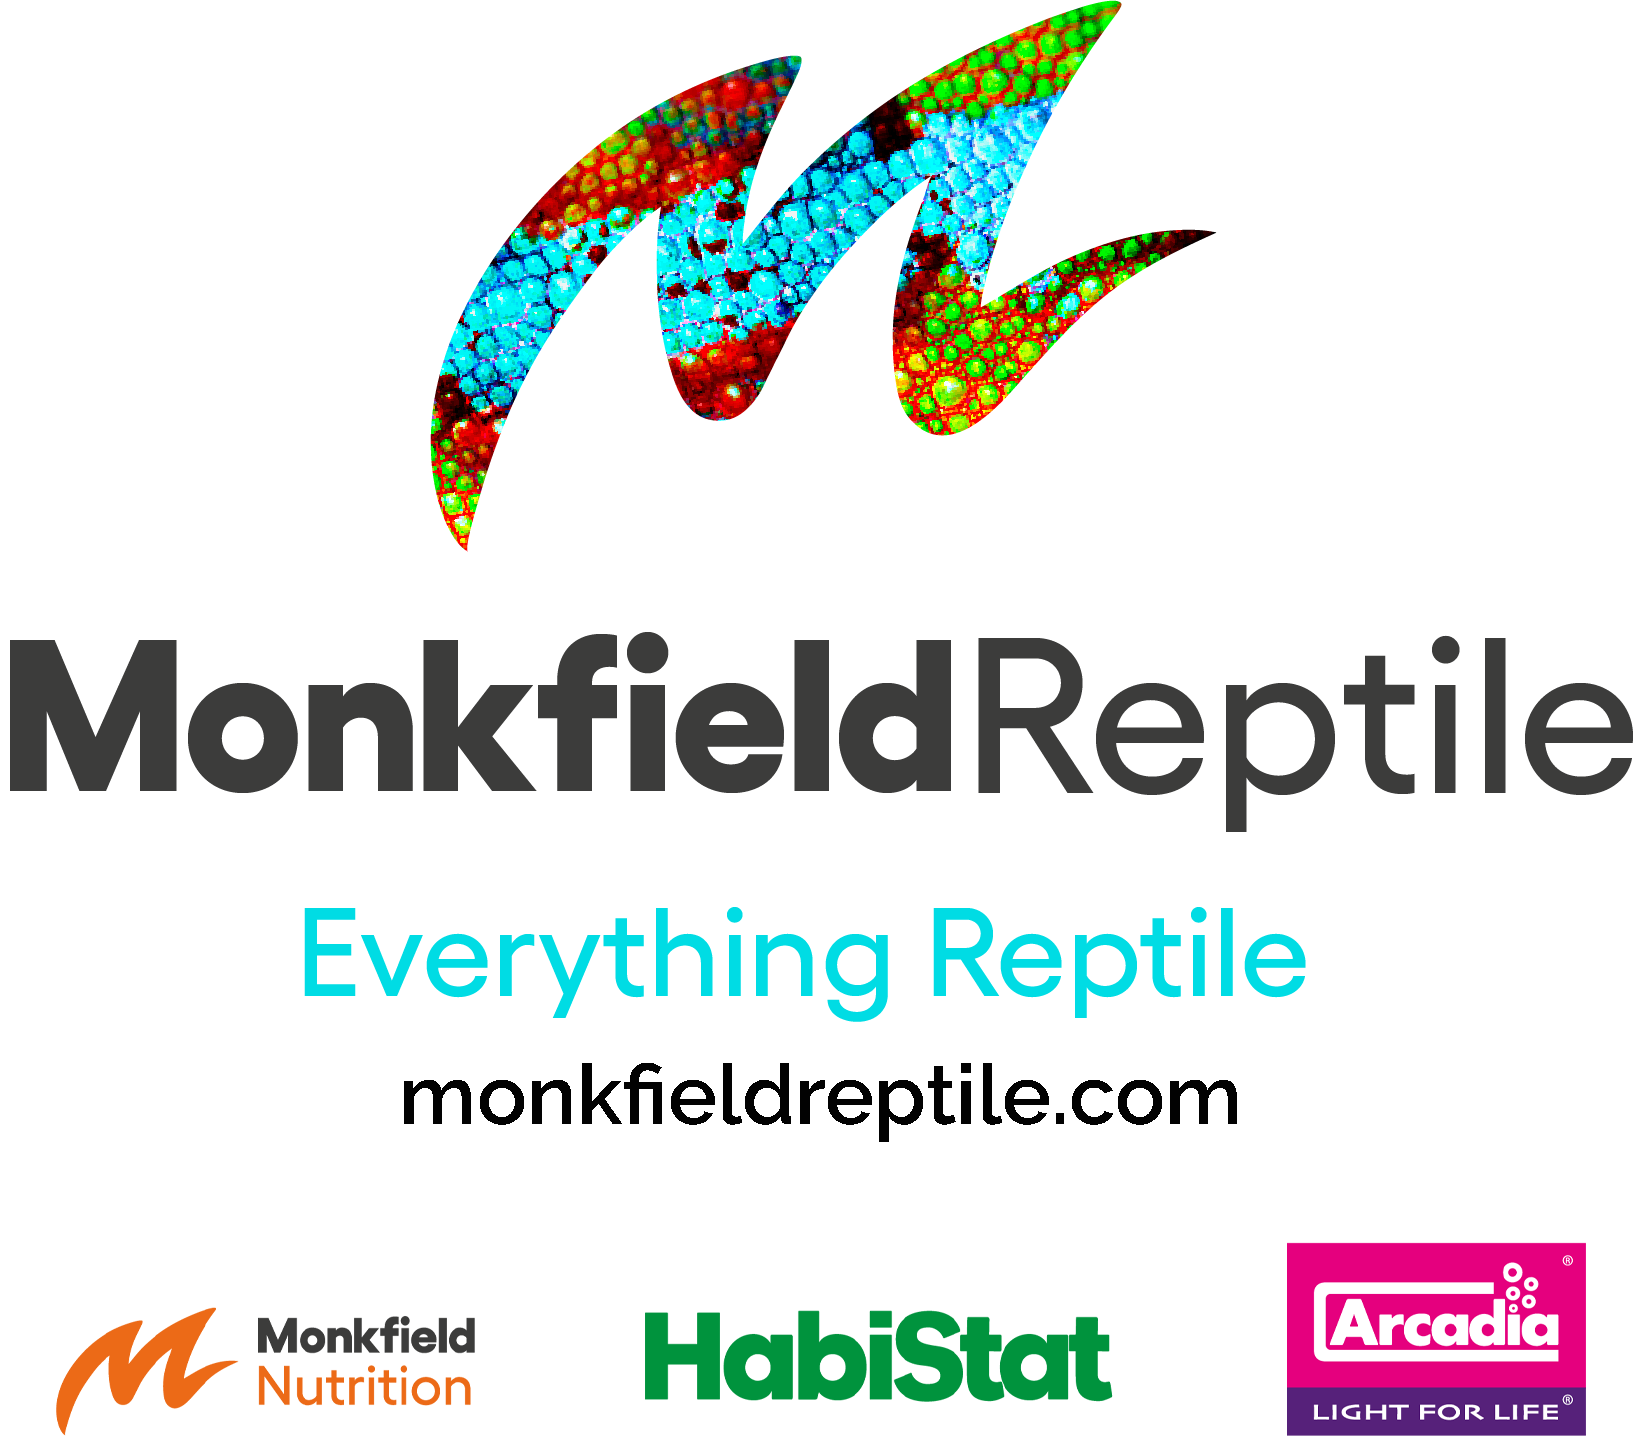 Monkfield Reptile